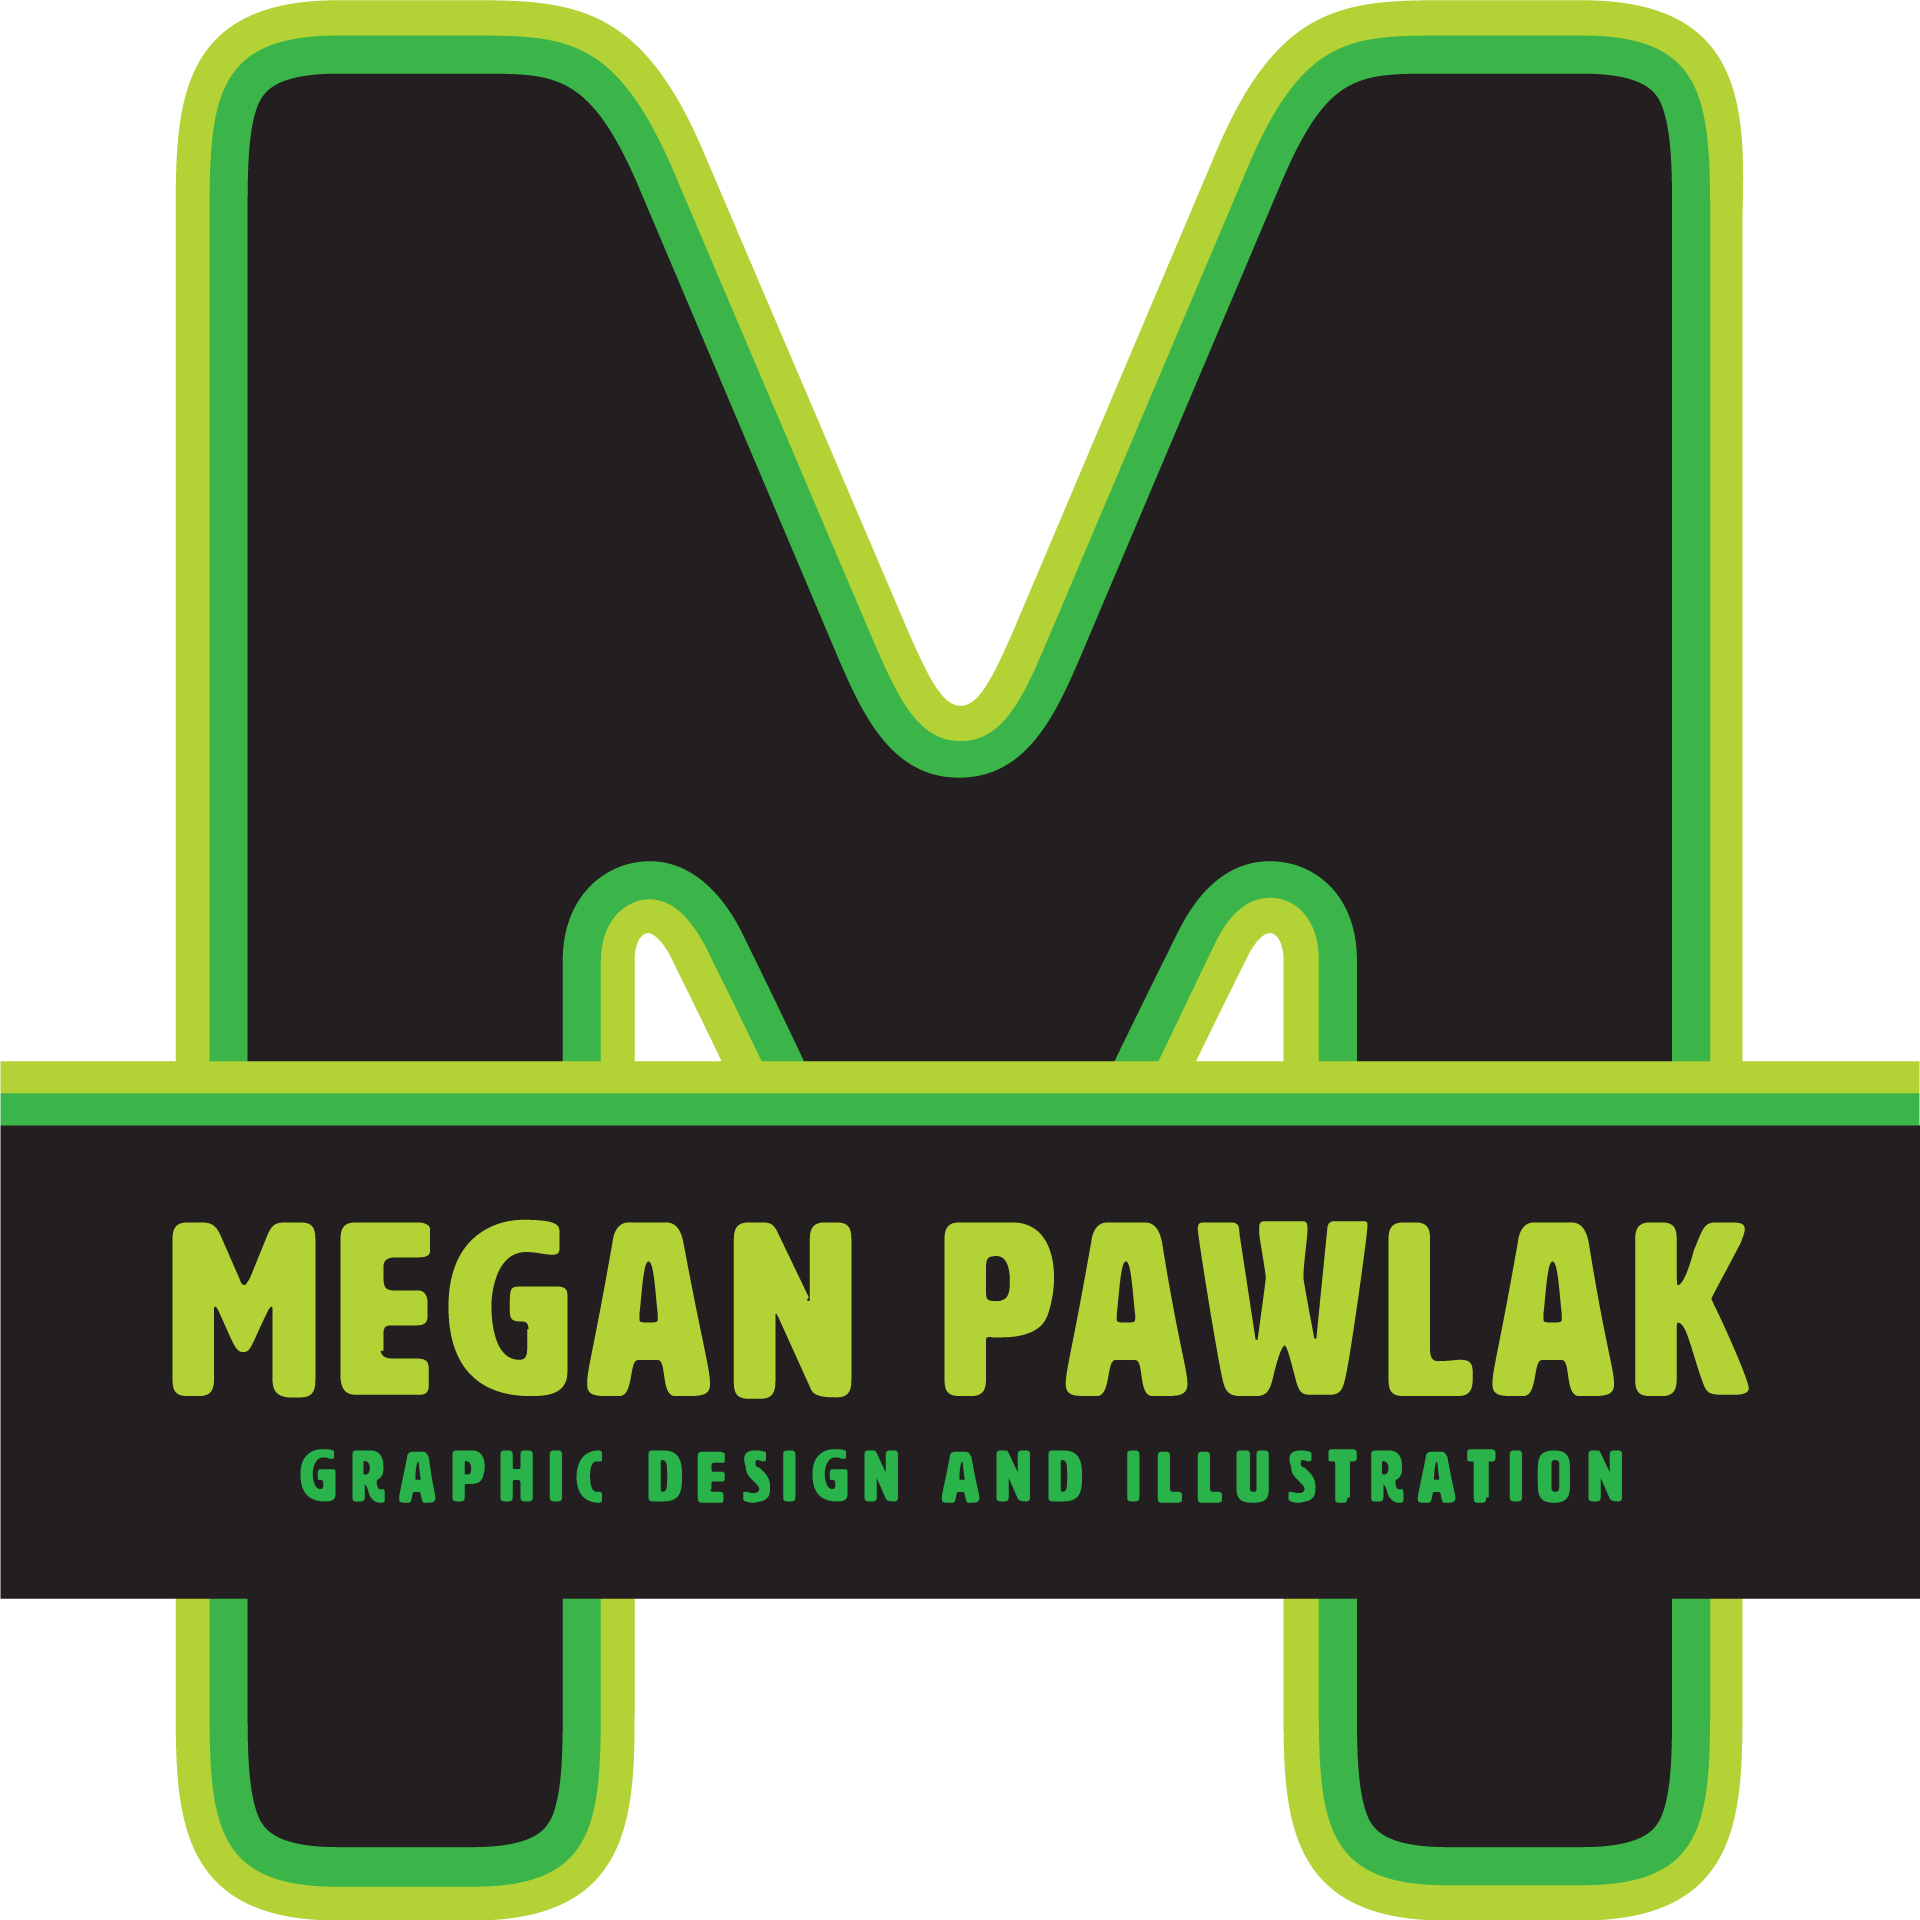 Megan Pawlak Graphic Design and Illustration